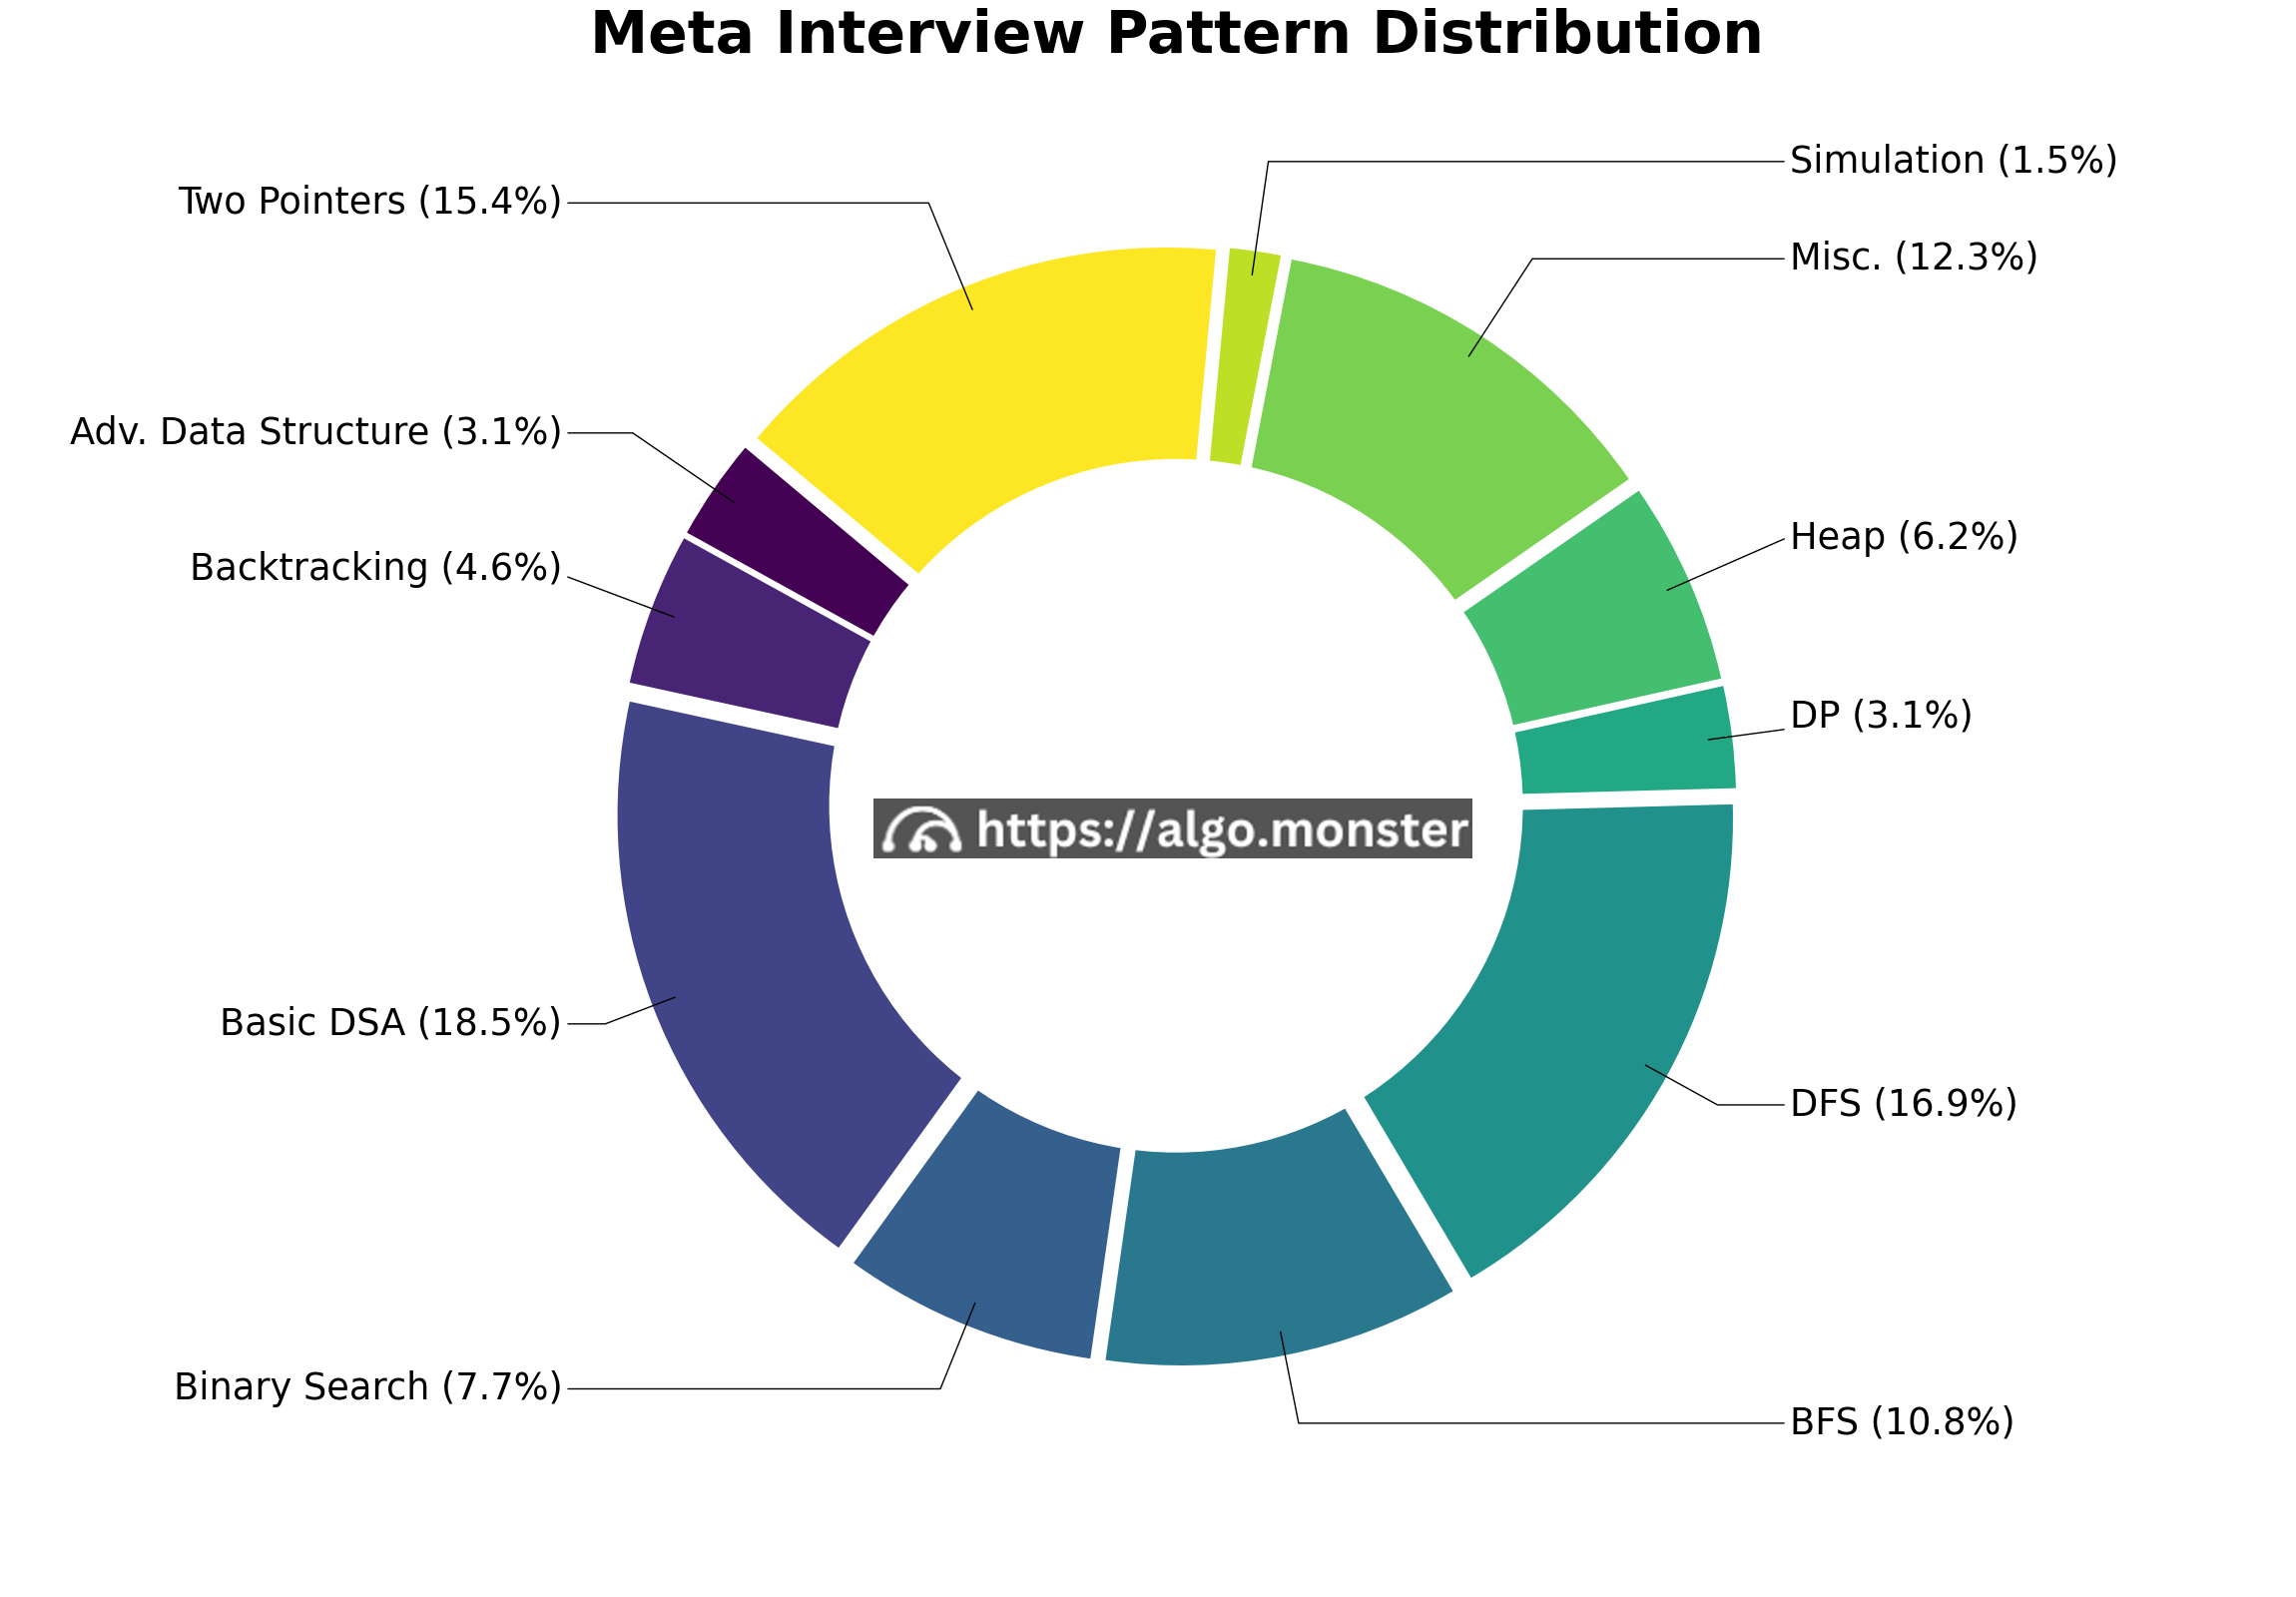 Meta interview questions breakdown